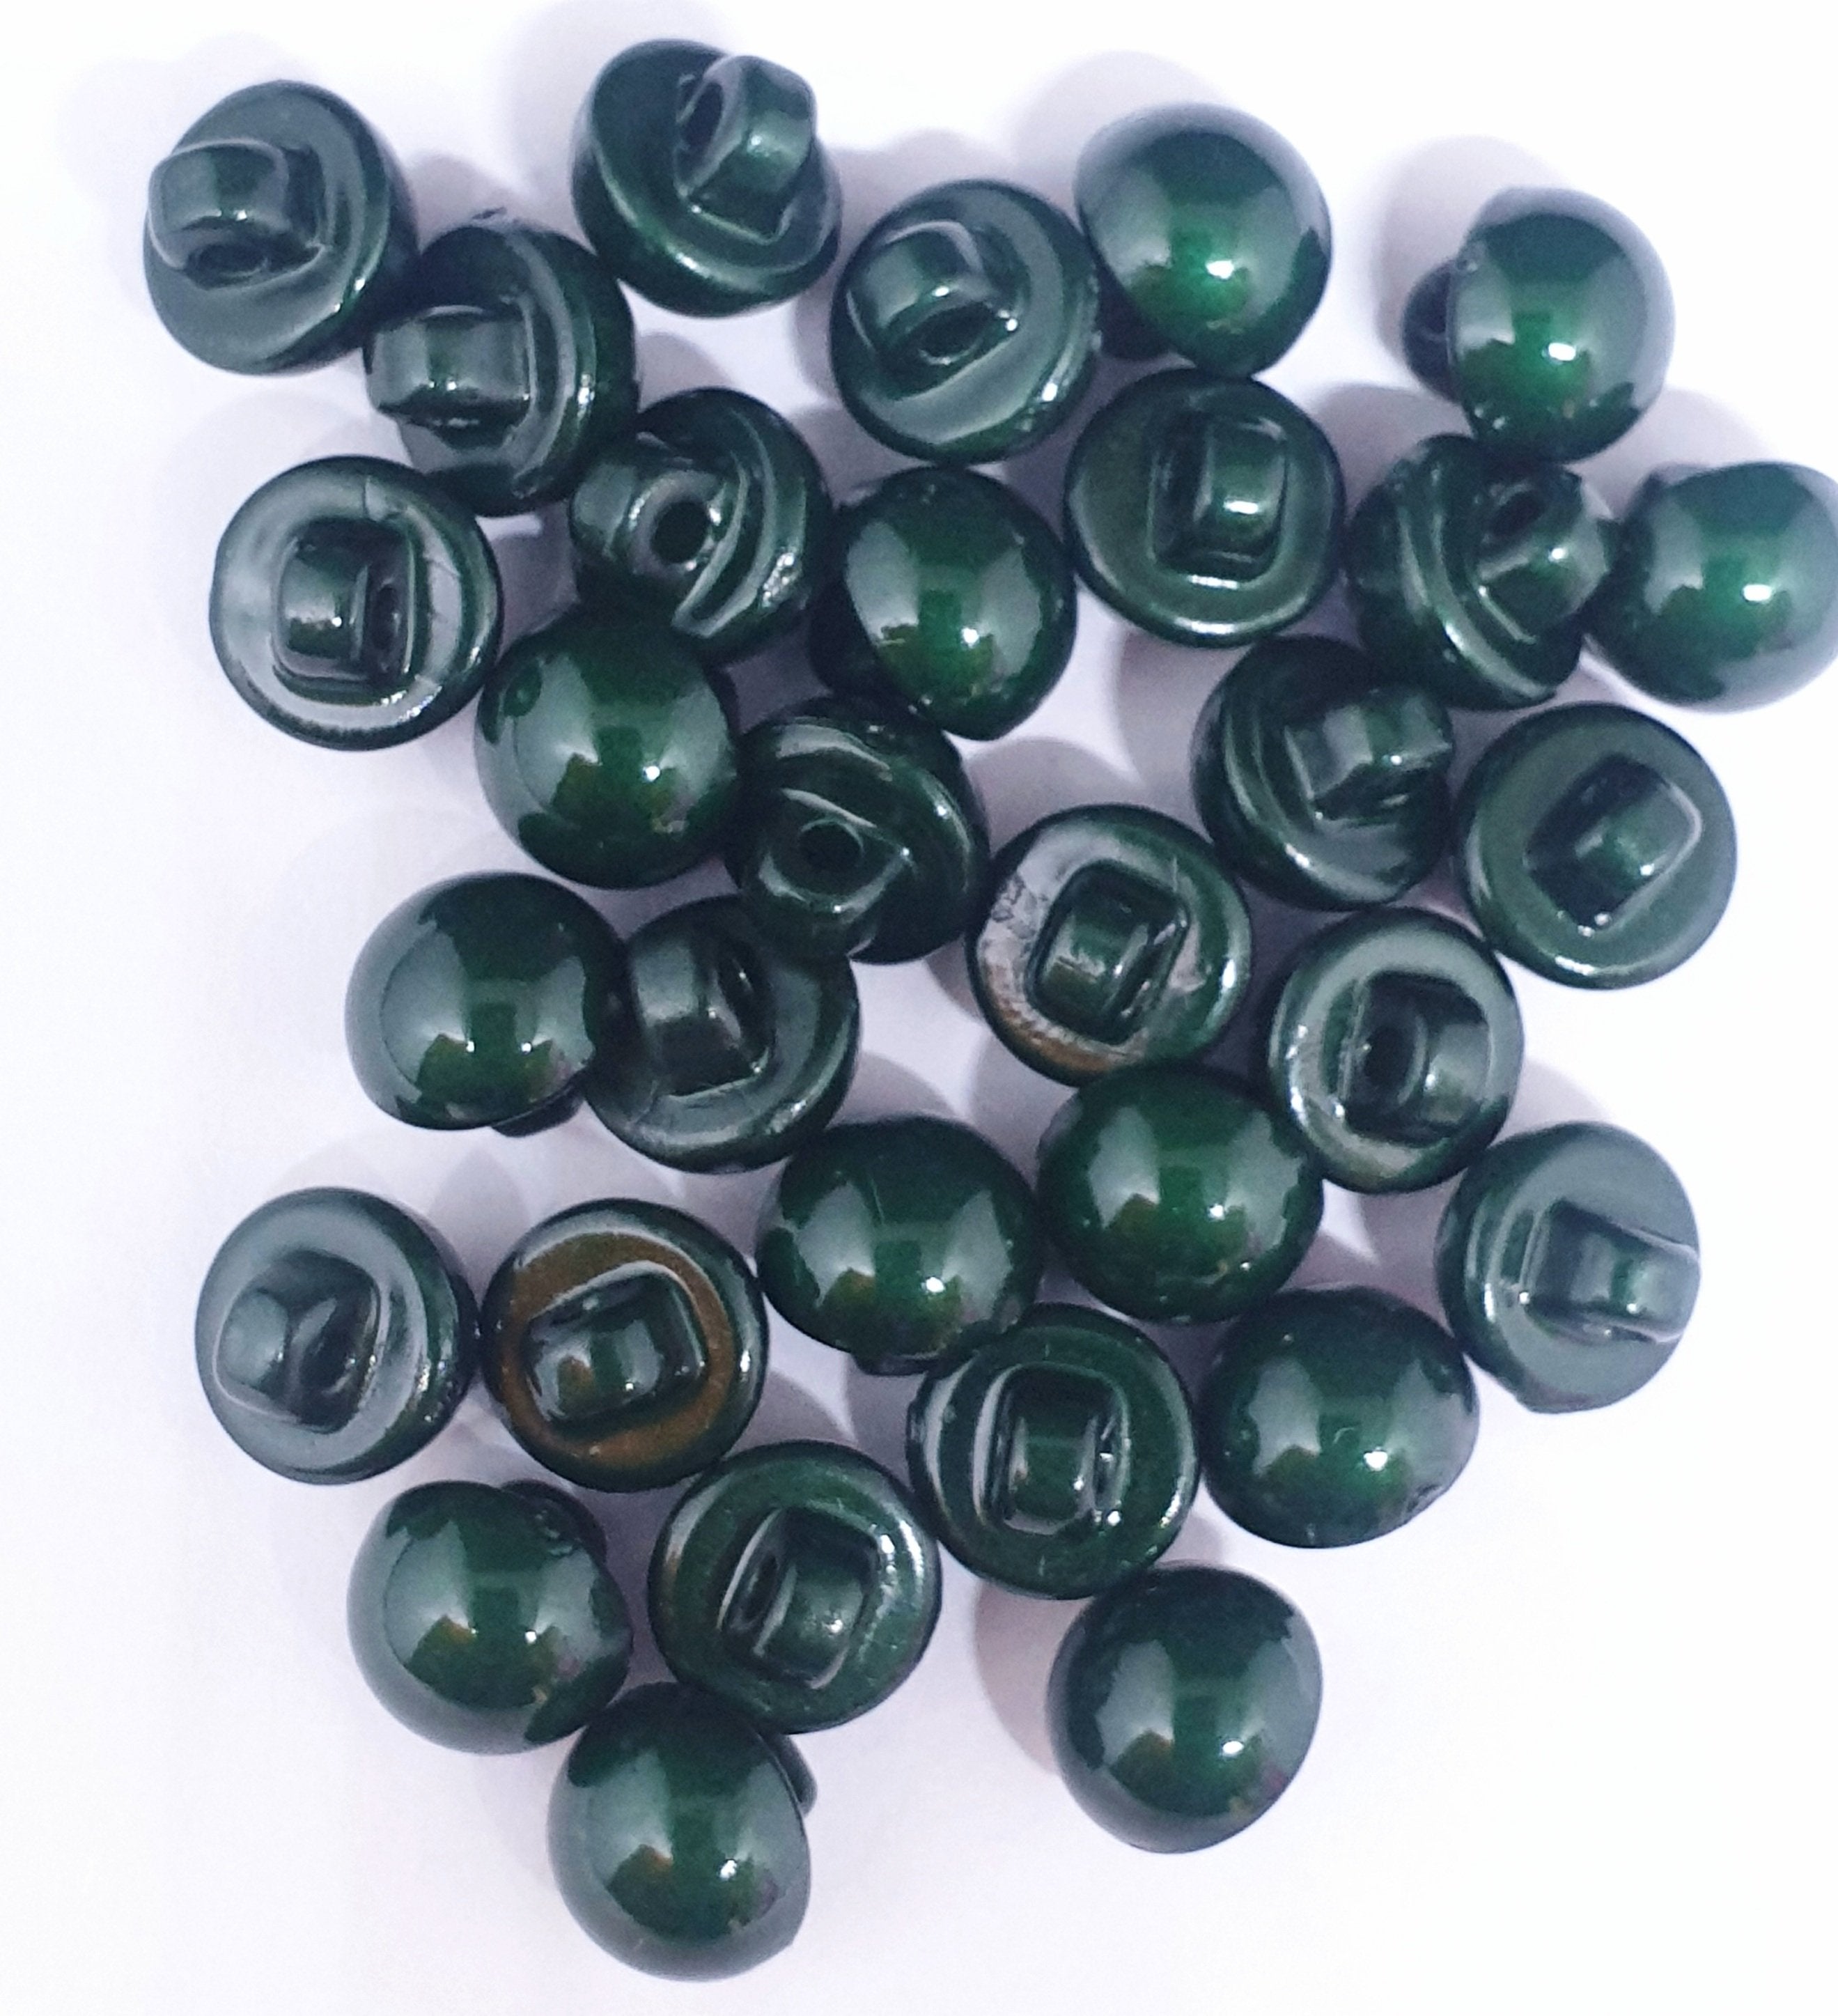 MajorCrafts 30pcs 10mm Dark Green High-Grade Acrylic Small Round Sewing Mushroom Shank Buttons